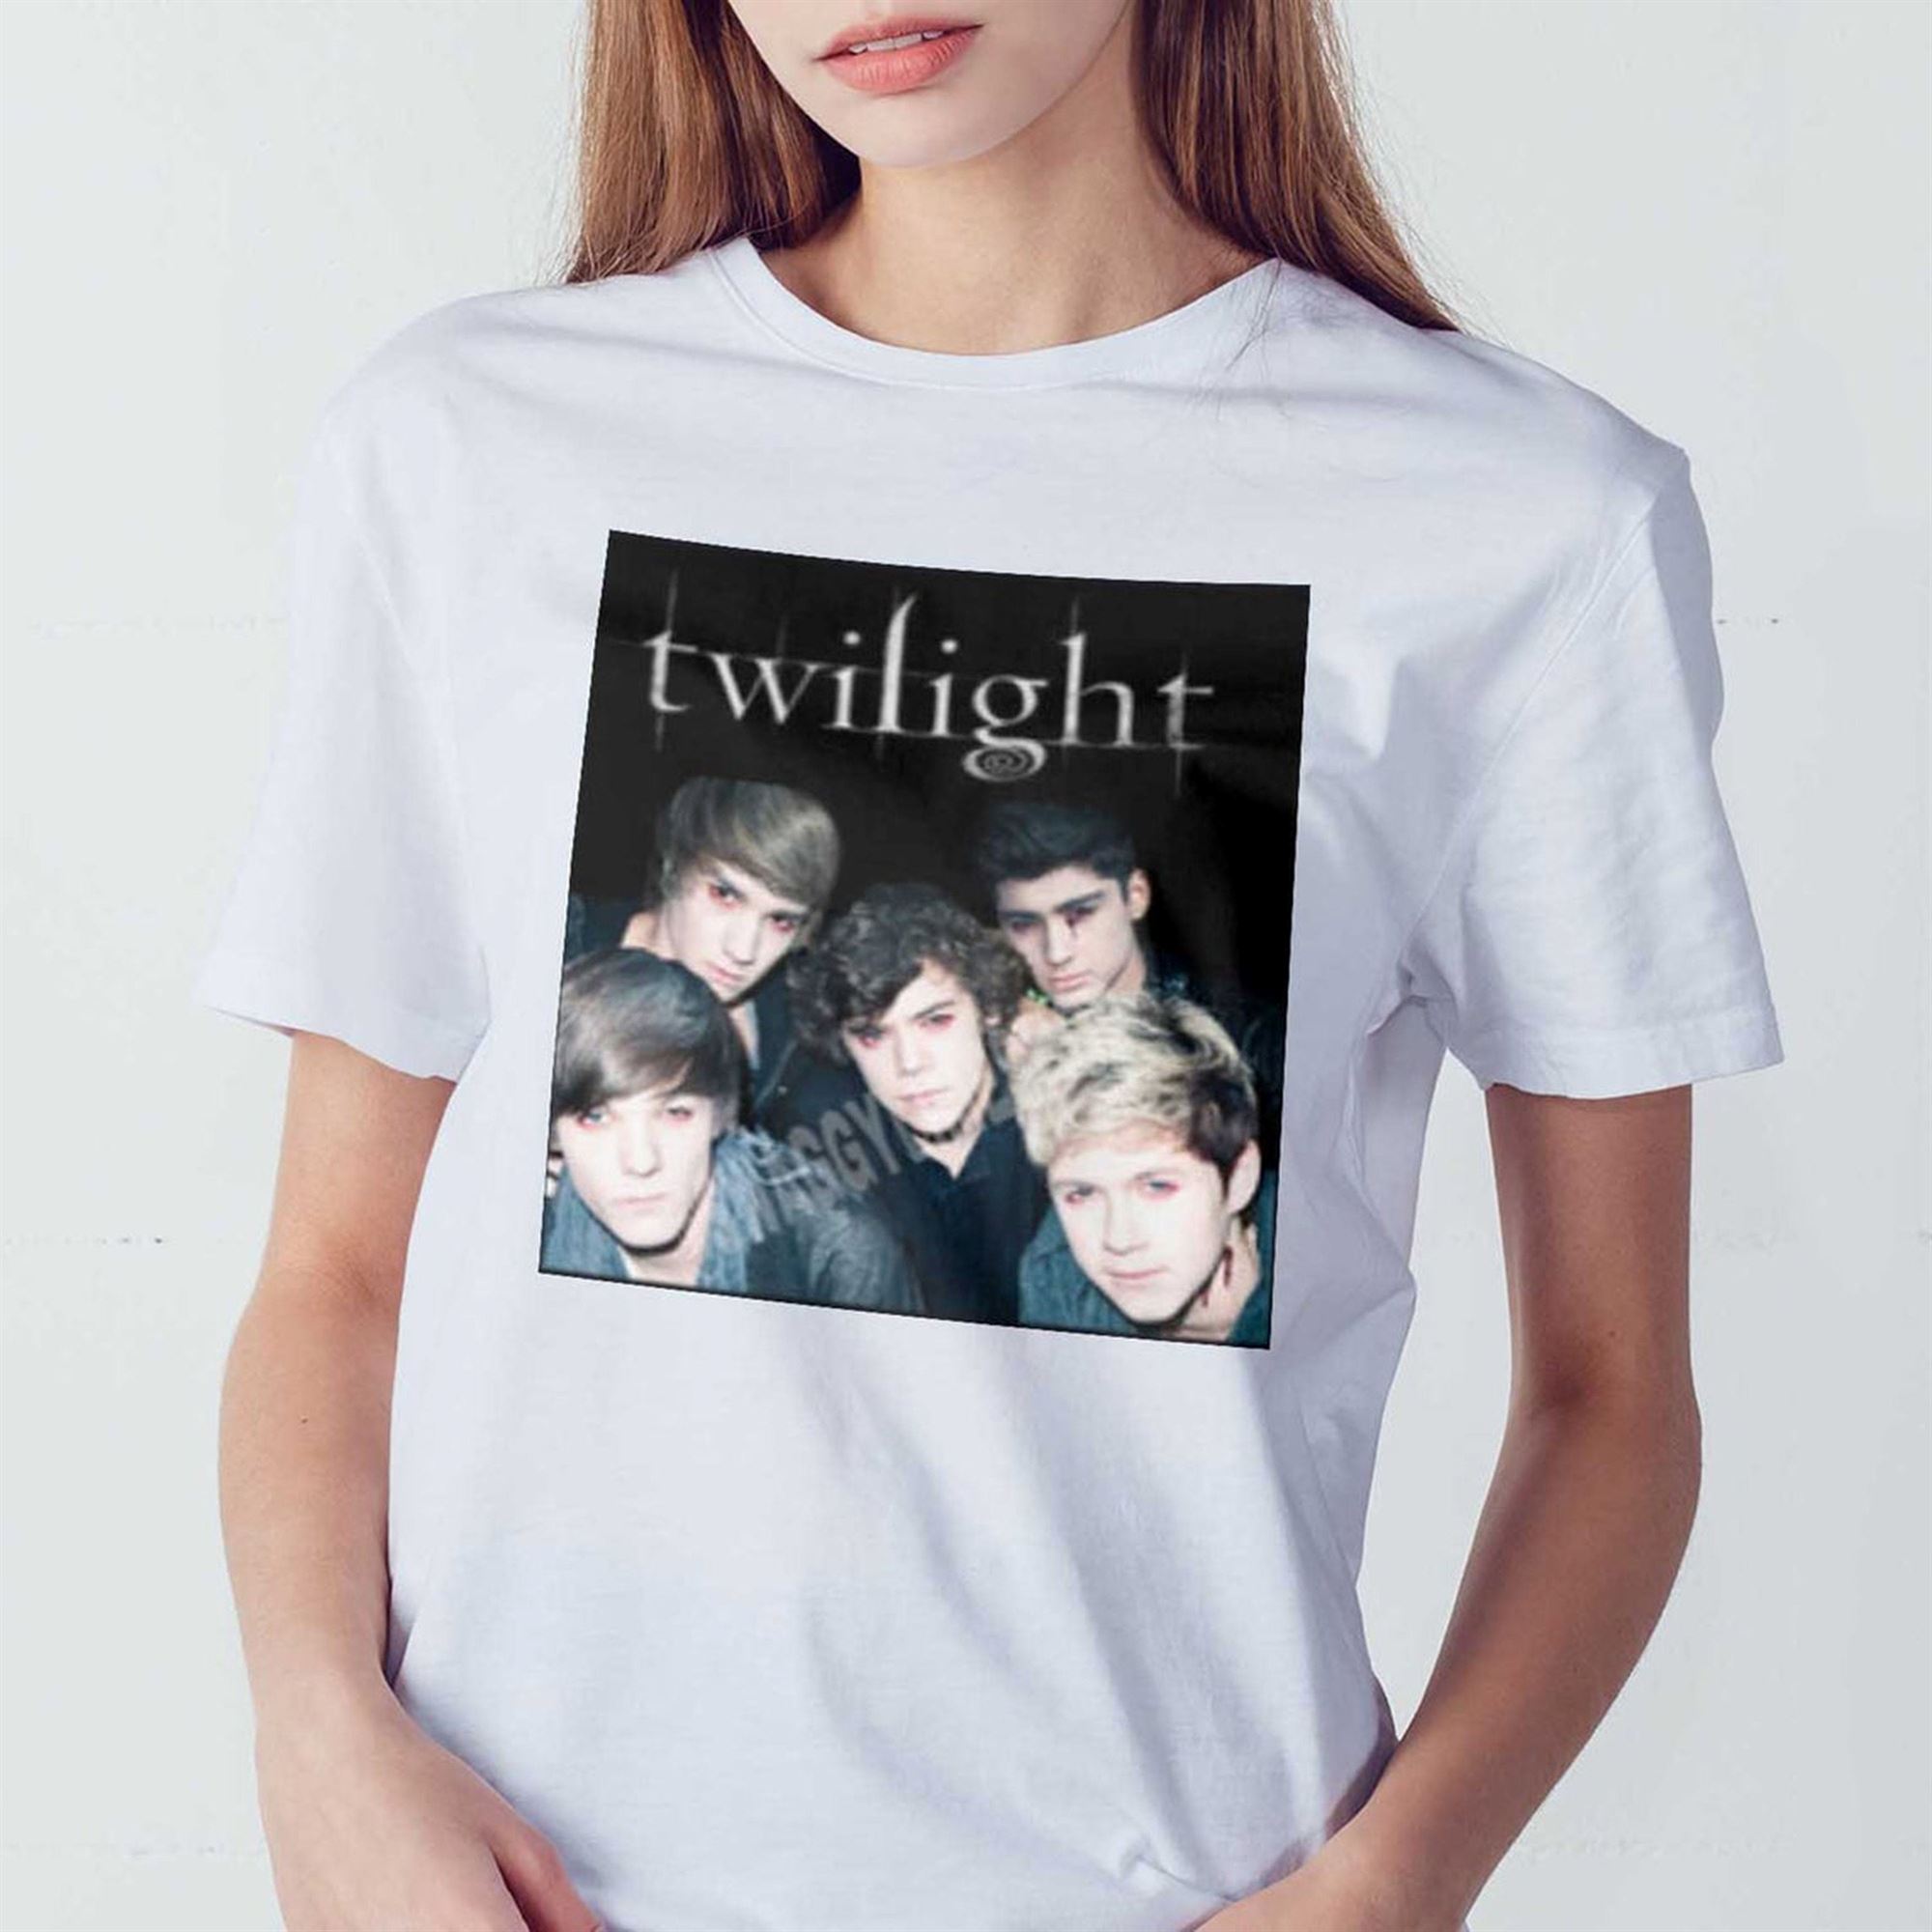 Twilight Shirt The Twilight Saga Edward Cullen Shirt Robert Pattinson Robert Pattinson Shirt One Direction As Twilight Shirt